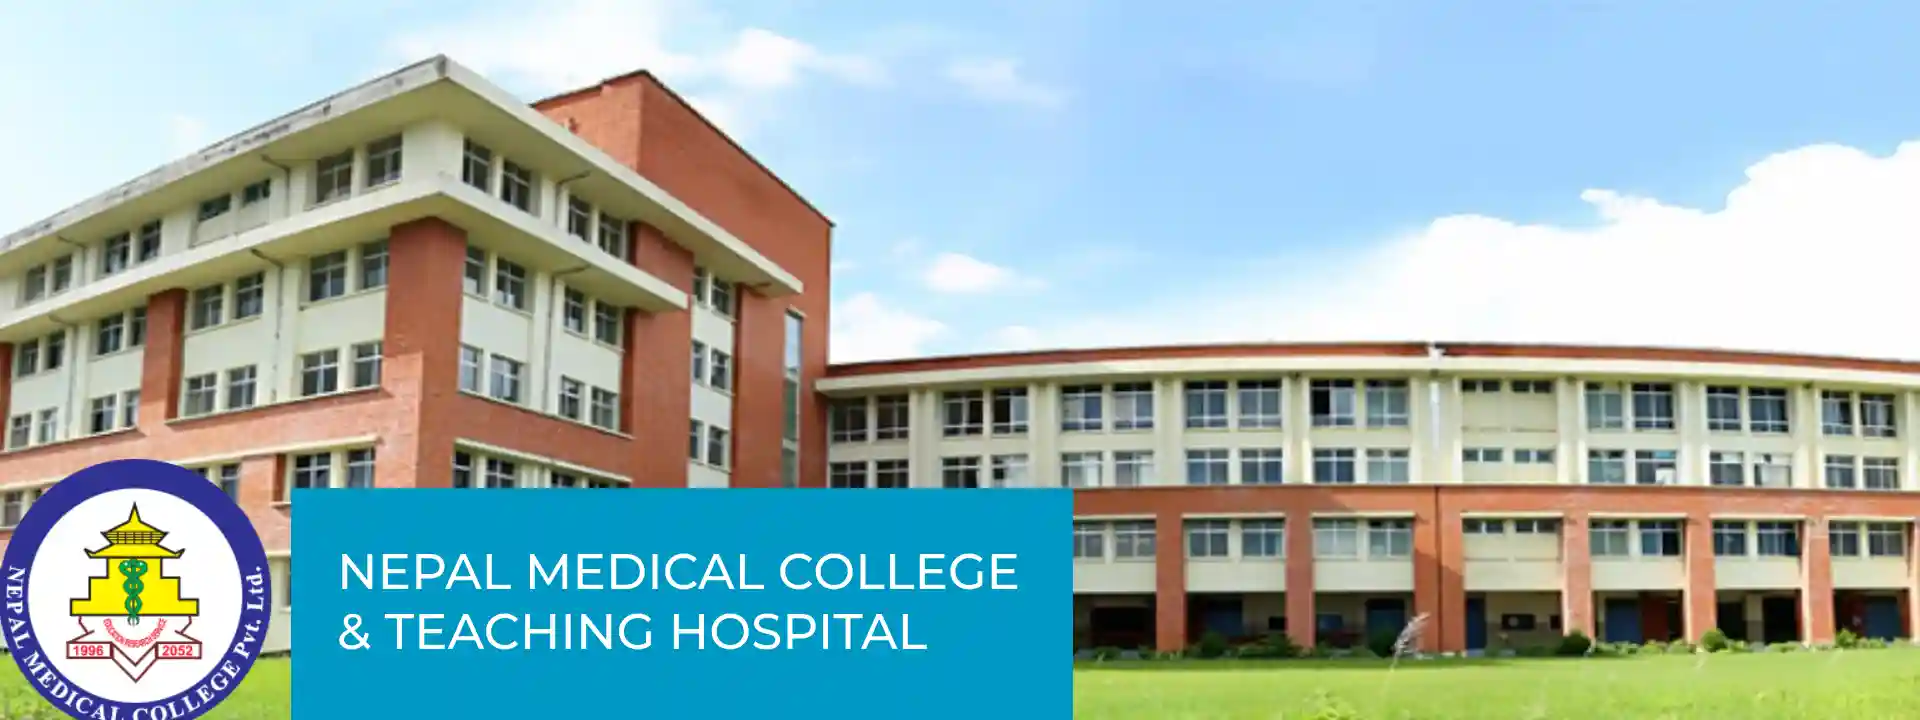 NEPAL MEDICAL COLLEGE TEACHING HOSPITAL